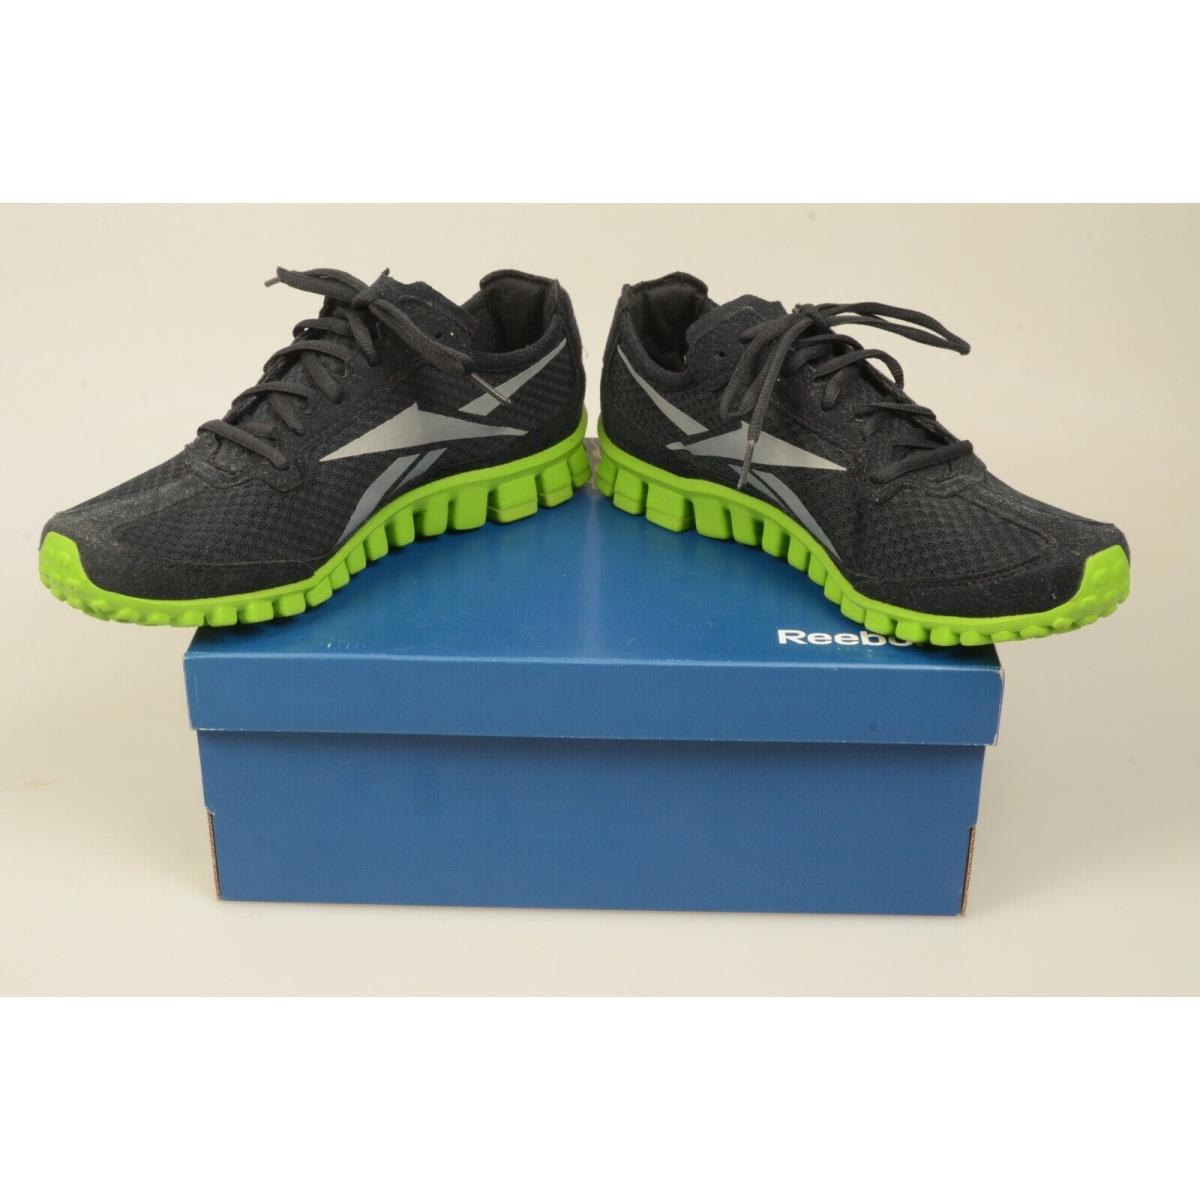 Reebok Men`s 8.5 Running Shoes Sneakers Black/gray/lime J83734